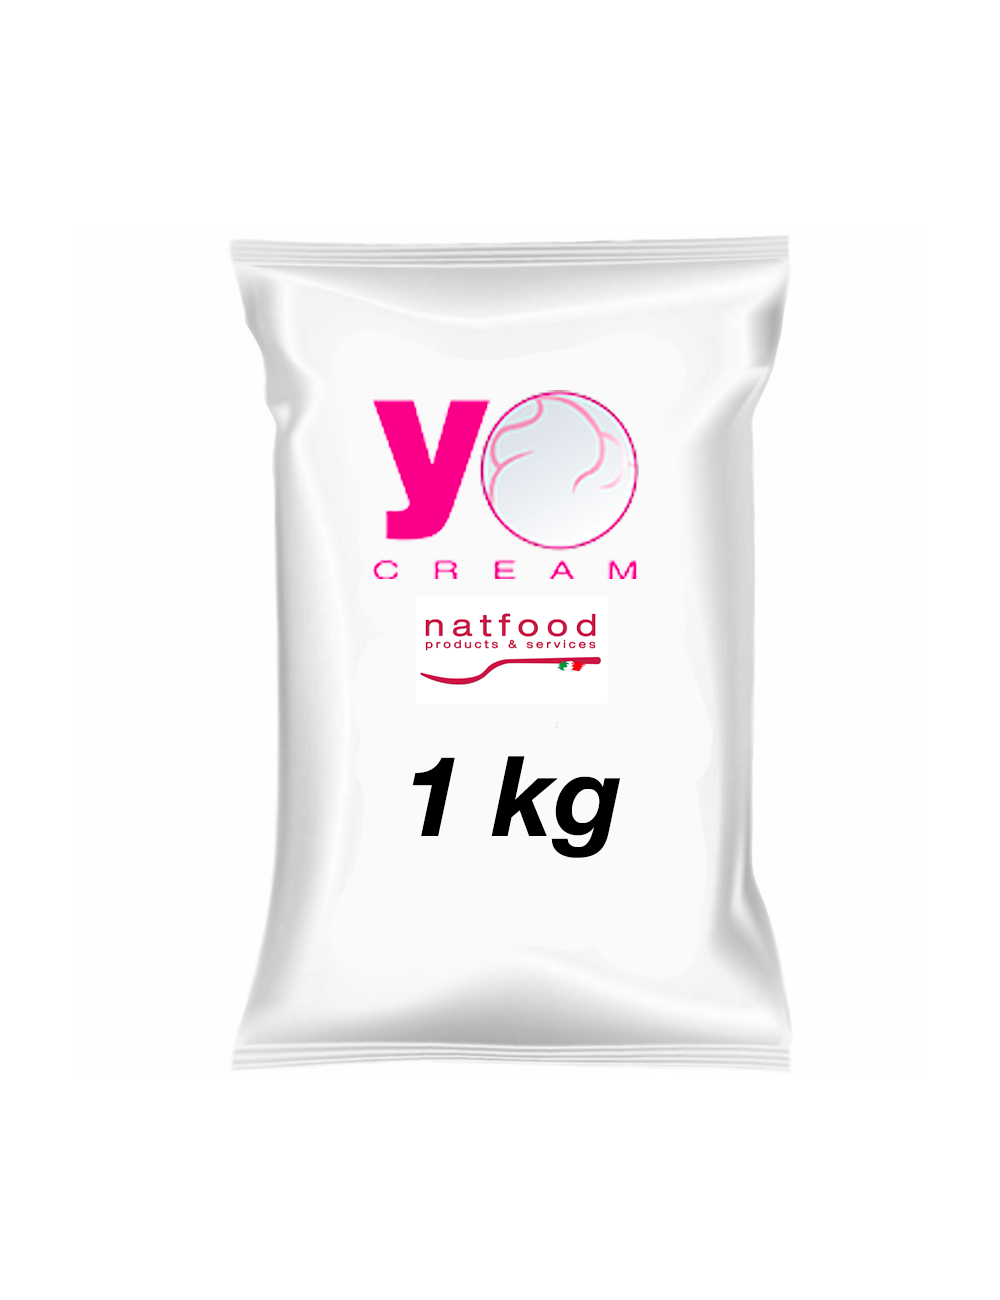 YOCREAM Cold cream yogurt bag 1000g